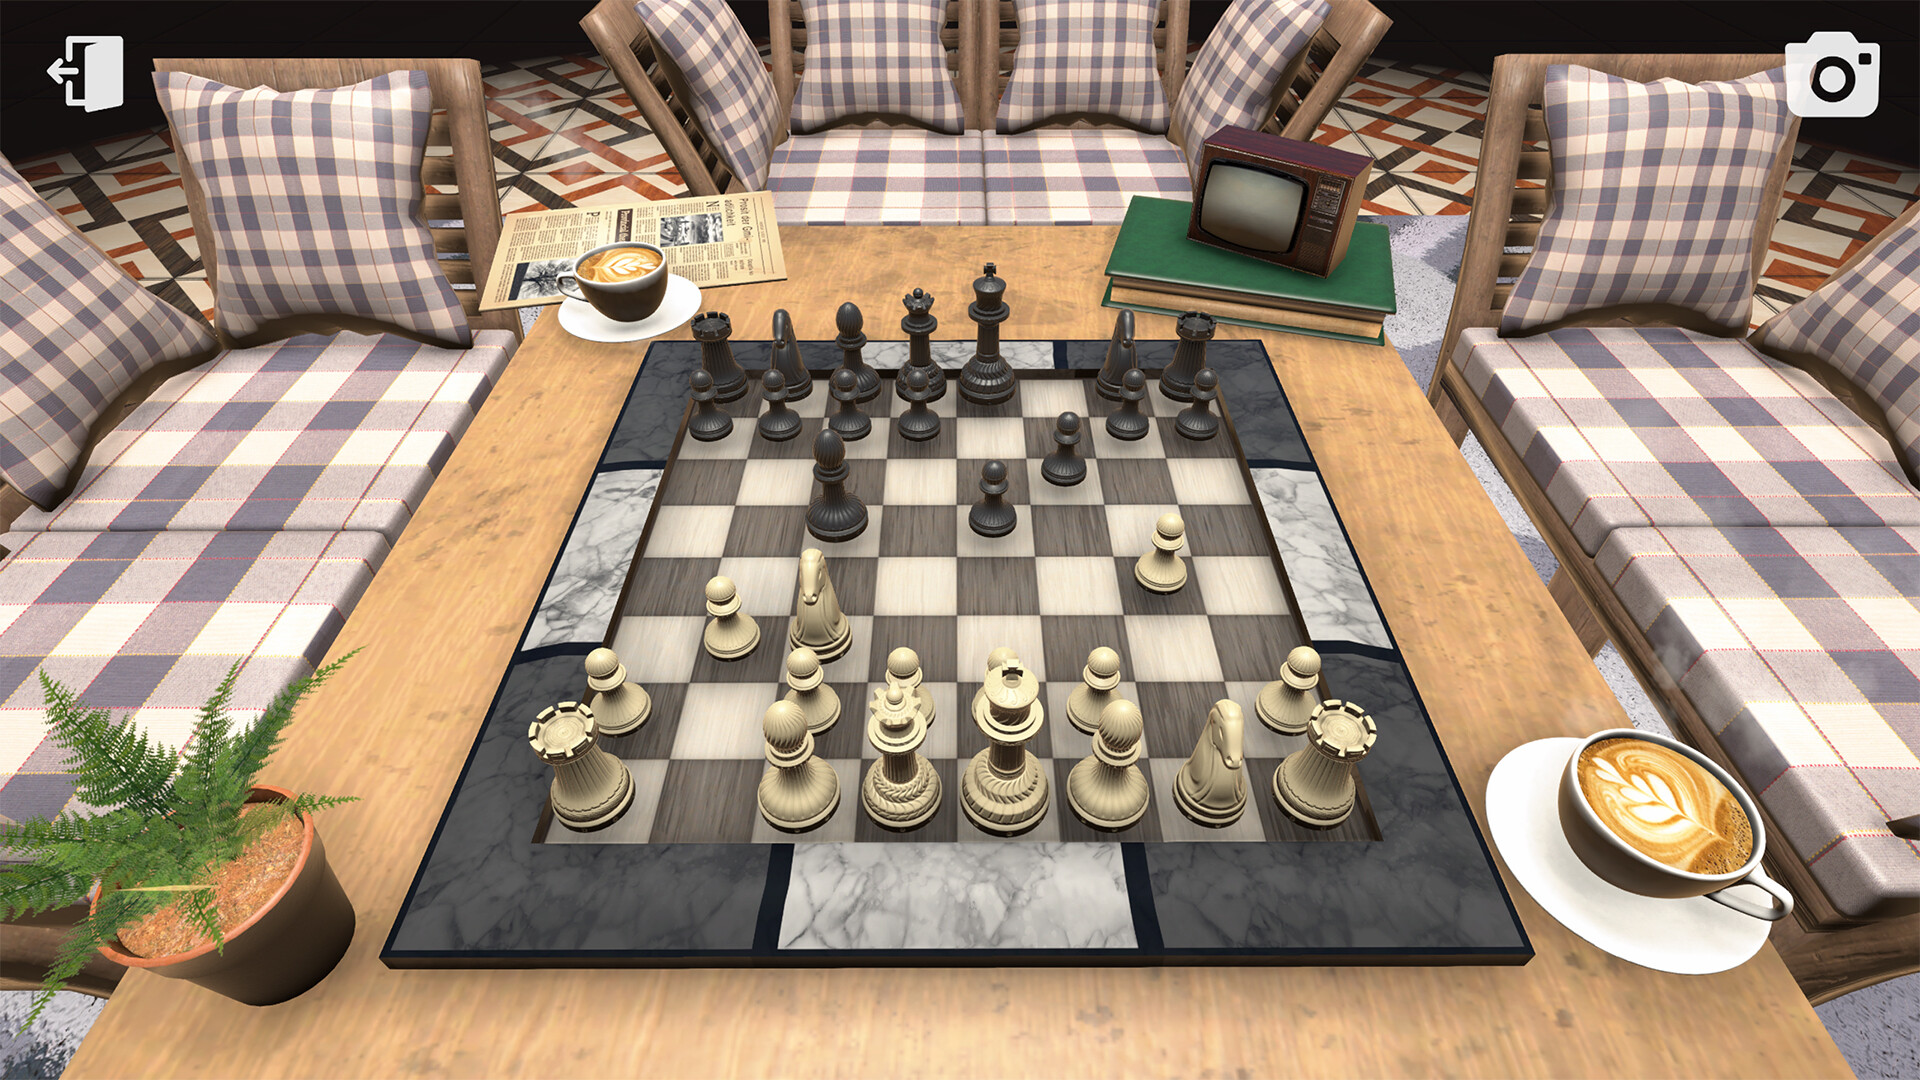 3D Chess on Steam